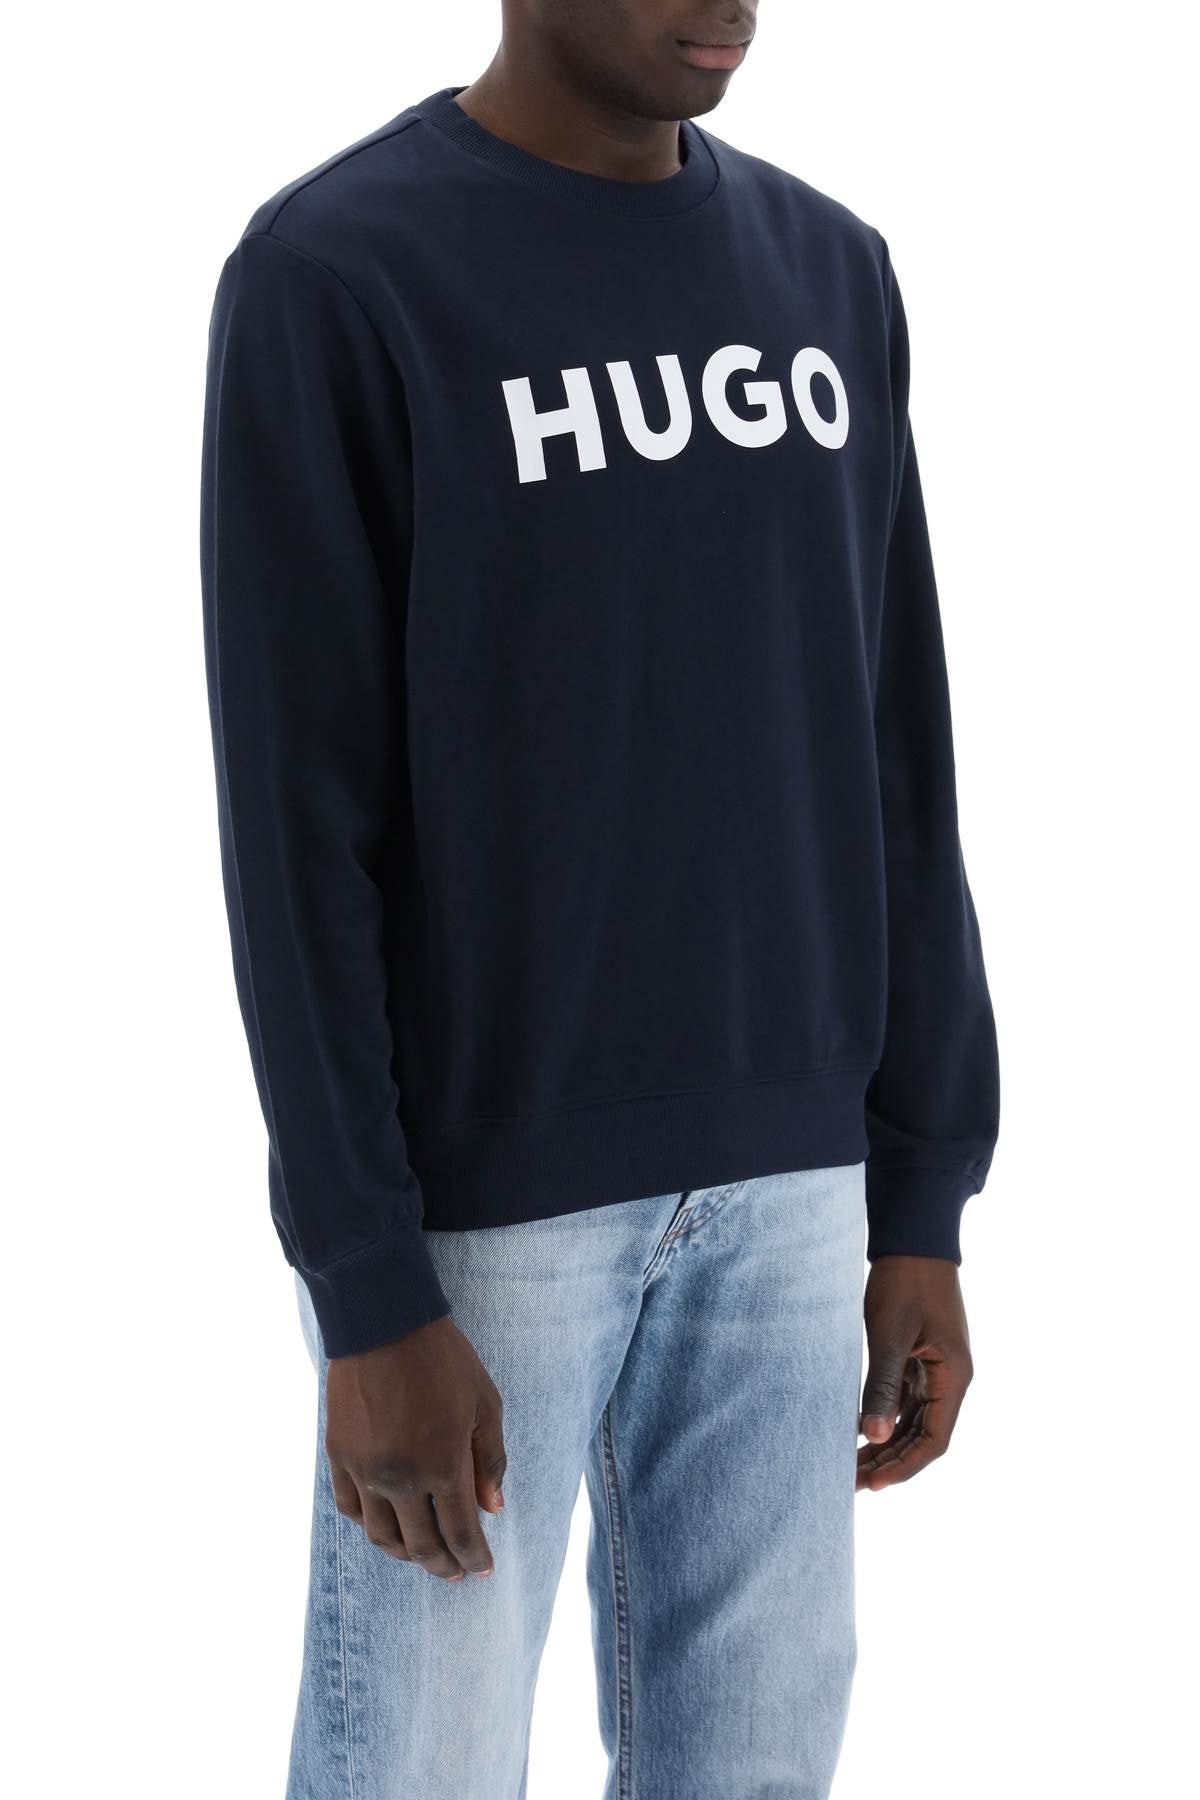 Hugo dem logo sweatshirt-1